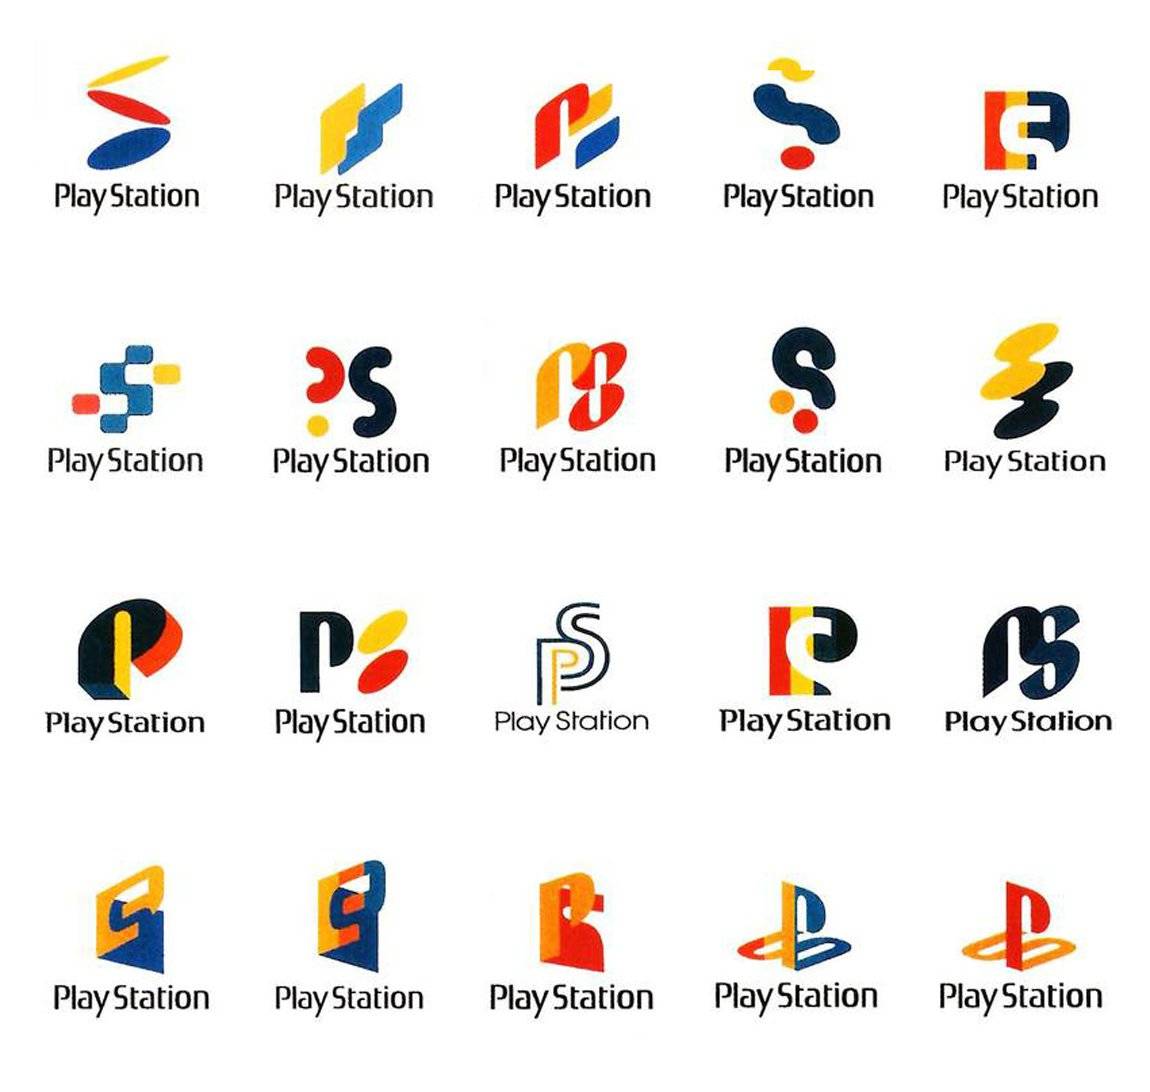 Sony PlayStation Logo - Sony Playstation 1 Logo Design Ideas and Concepts | The Logo Smith